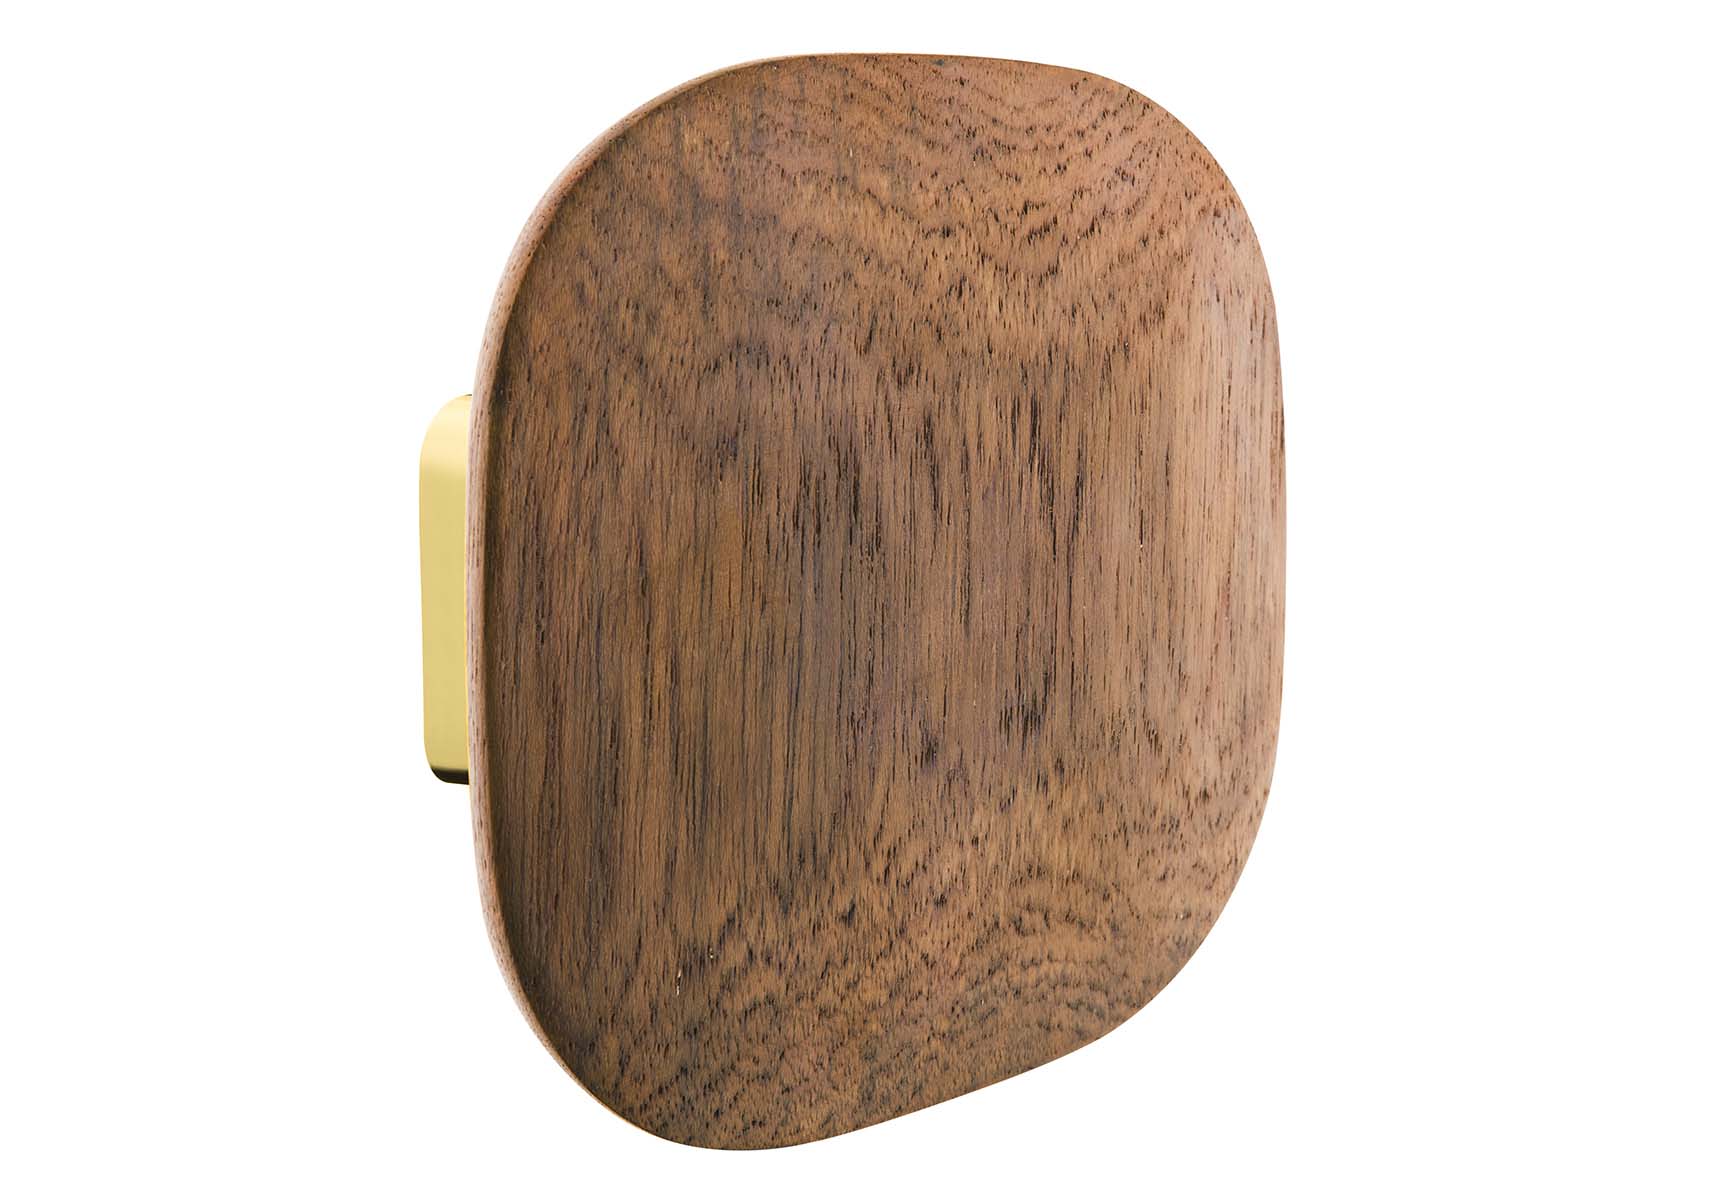 Eternity Large Bathrobe Holder (Square - Wooden) - Gold